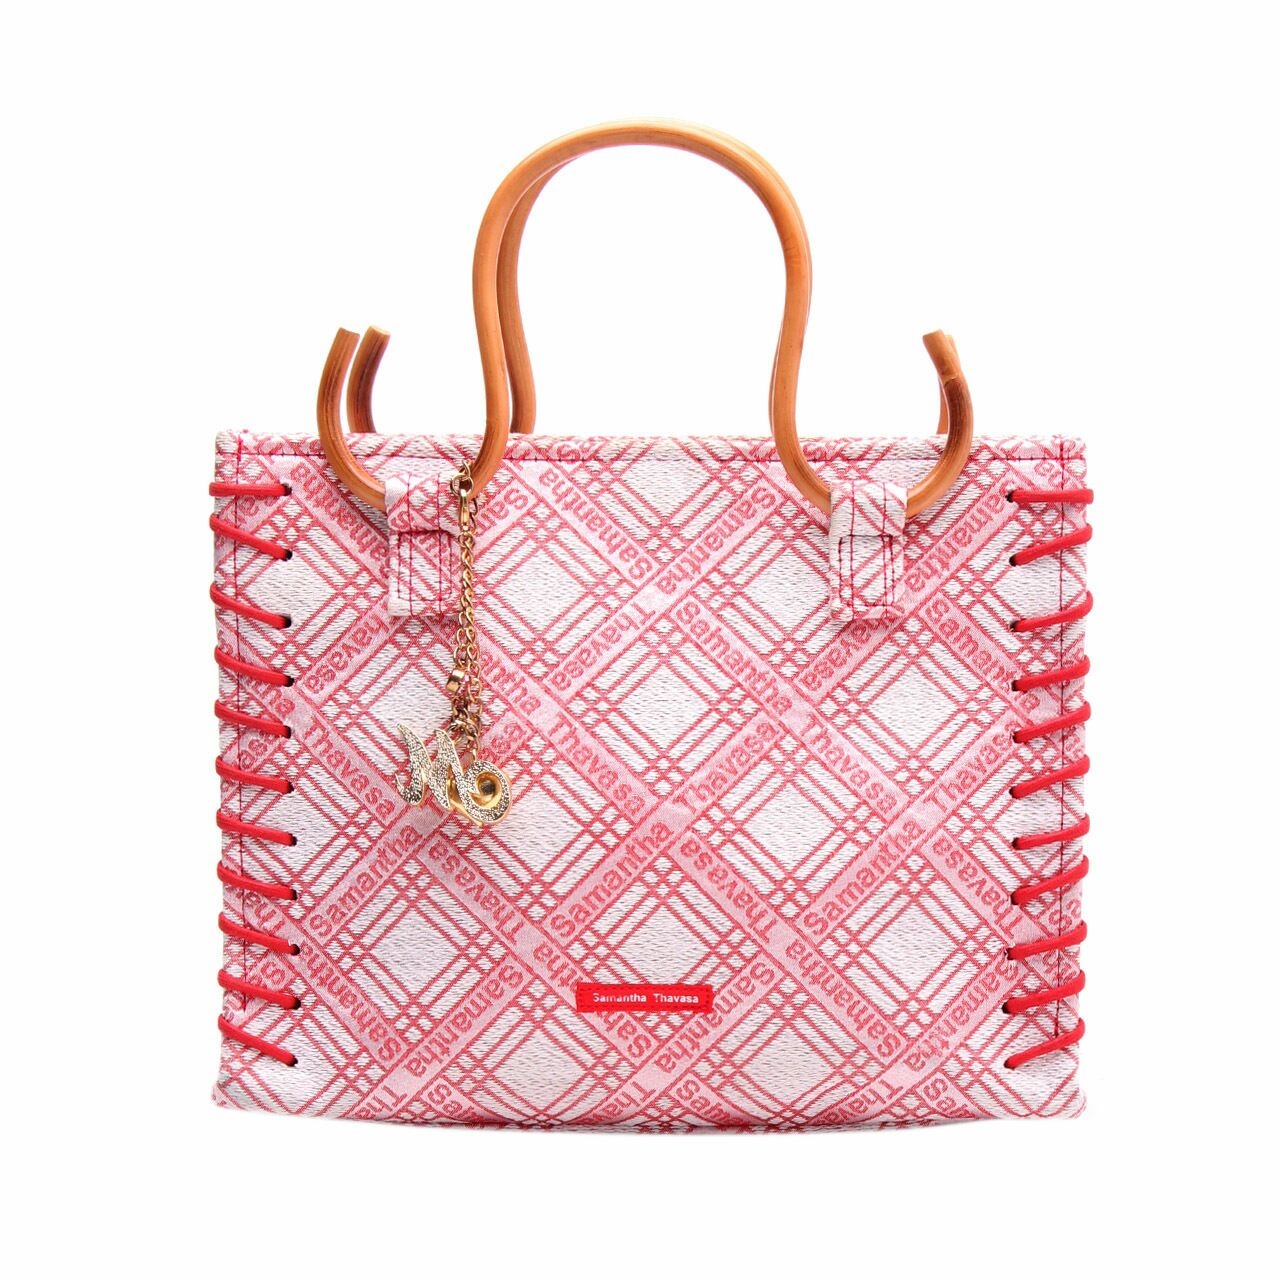 Samantha Thavasa Red & White Patterned Handbag